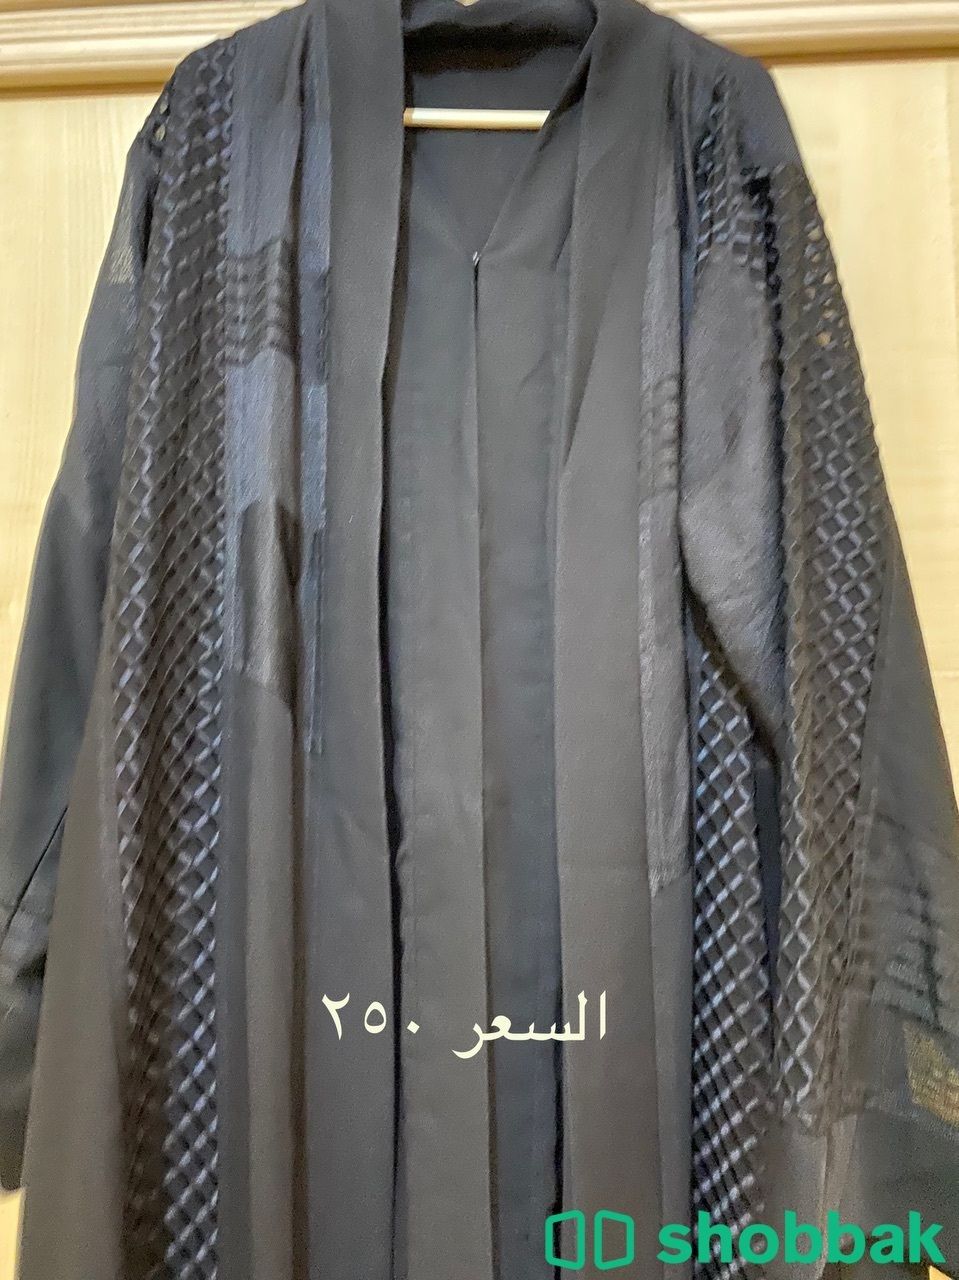 عبايات شغل دبي للبيع Shobbak Saudi Arabia